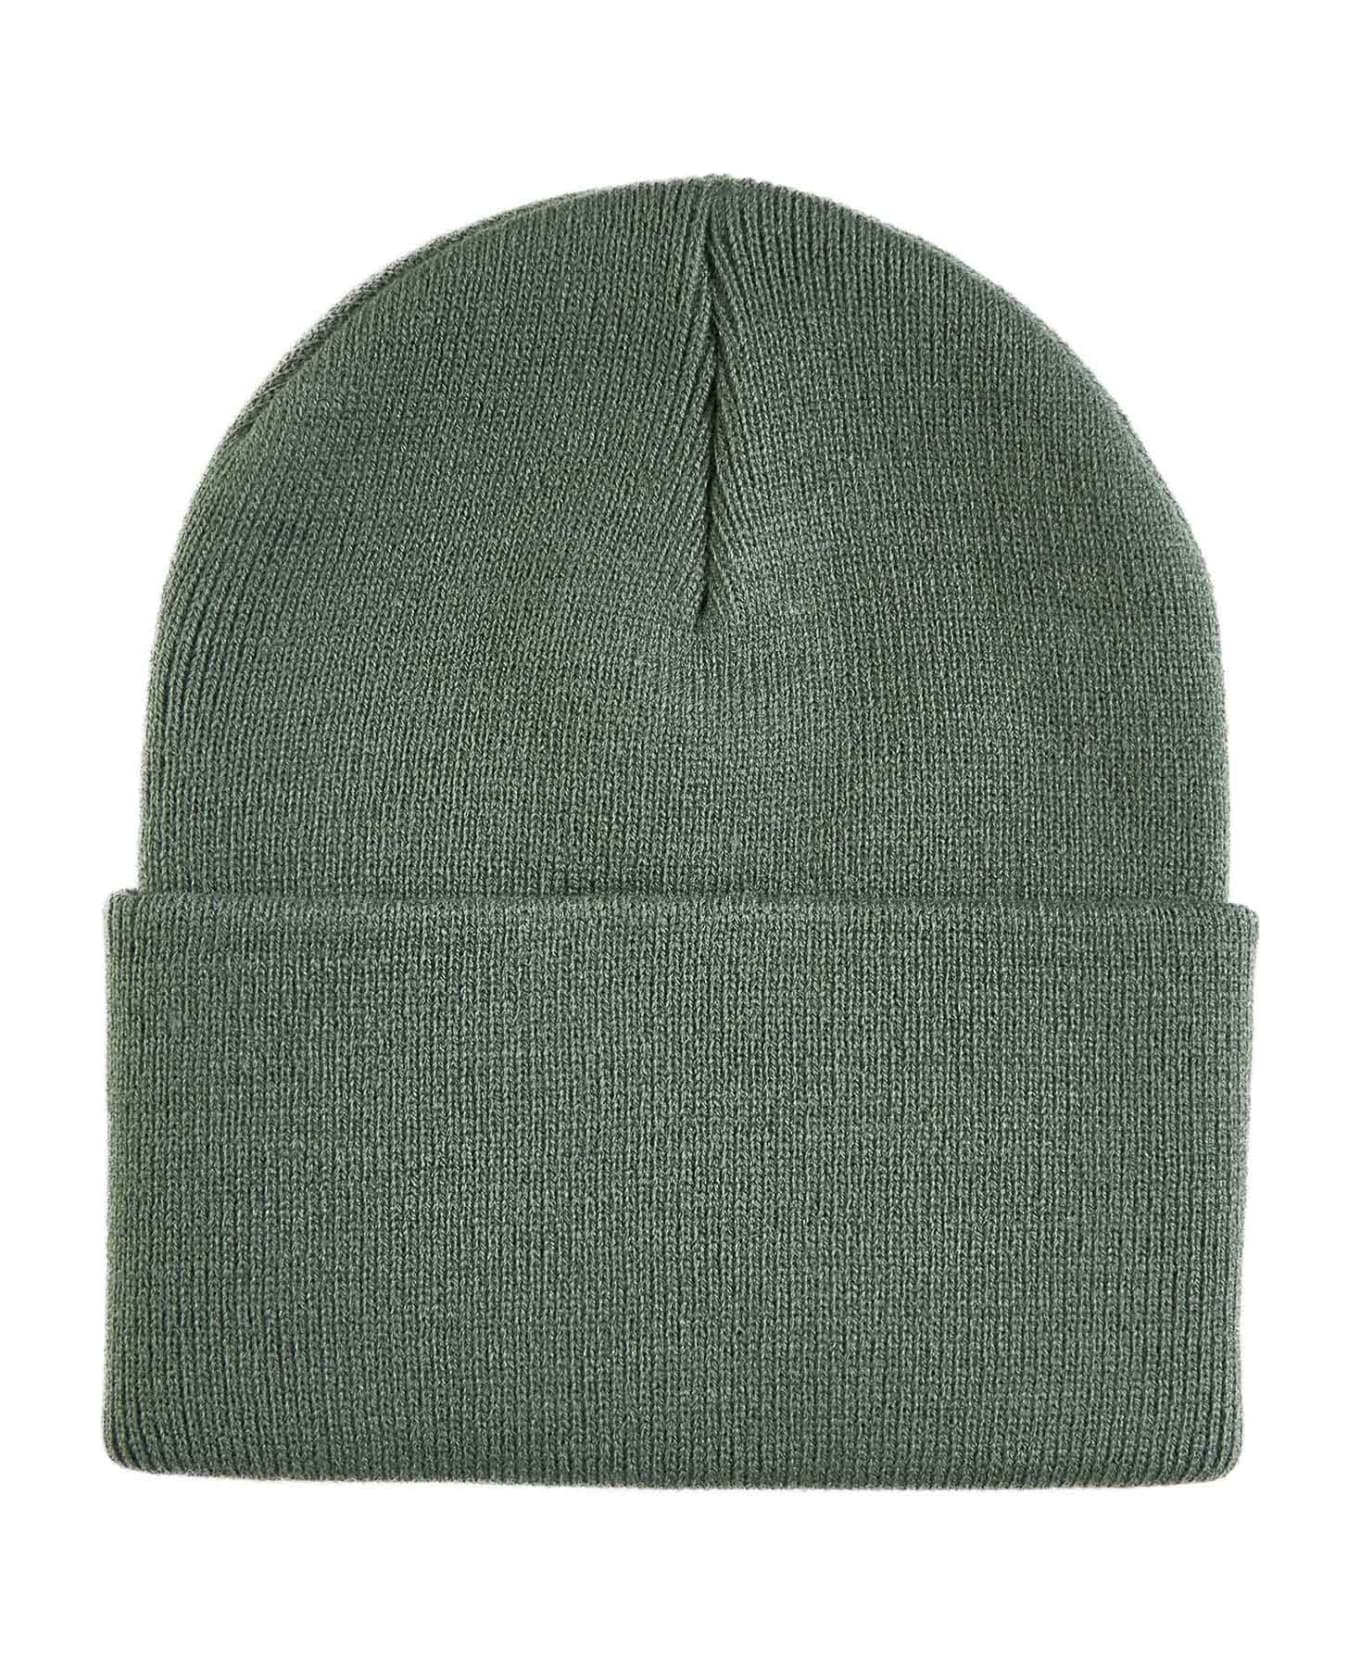 Carhartt Hat - Duck green 帽子